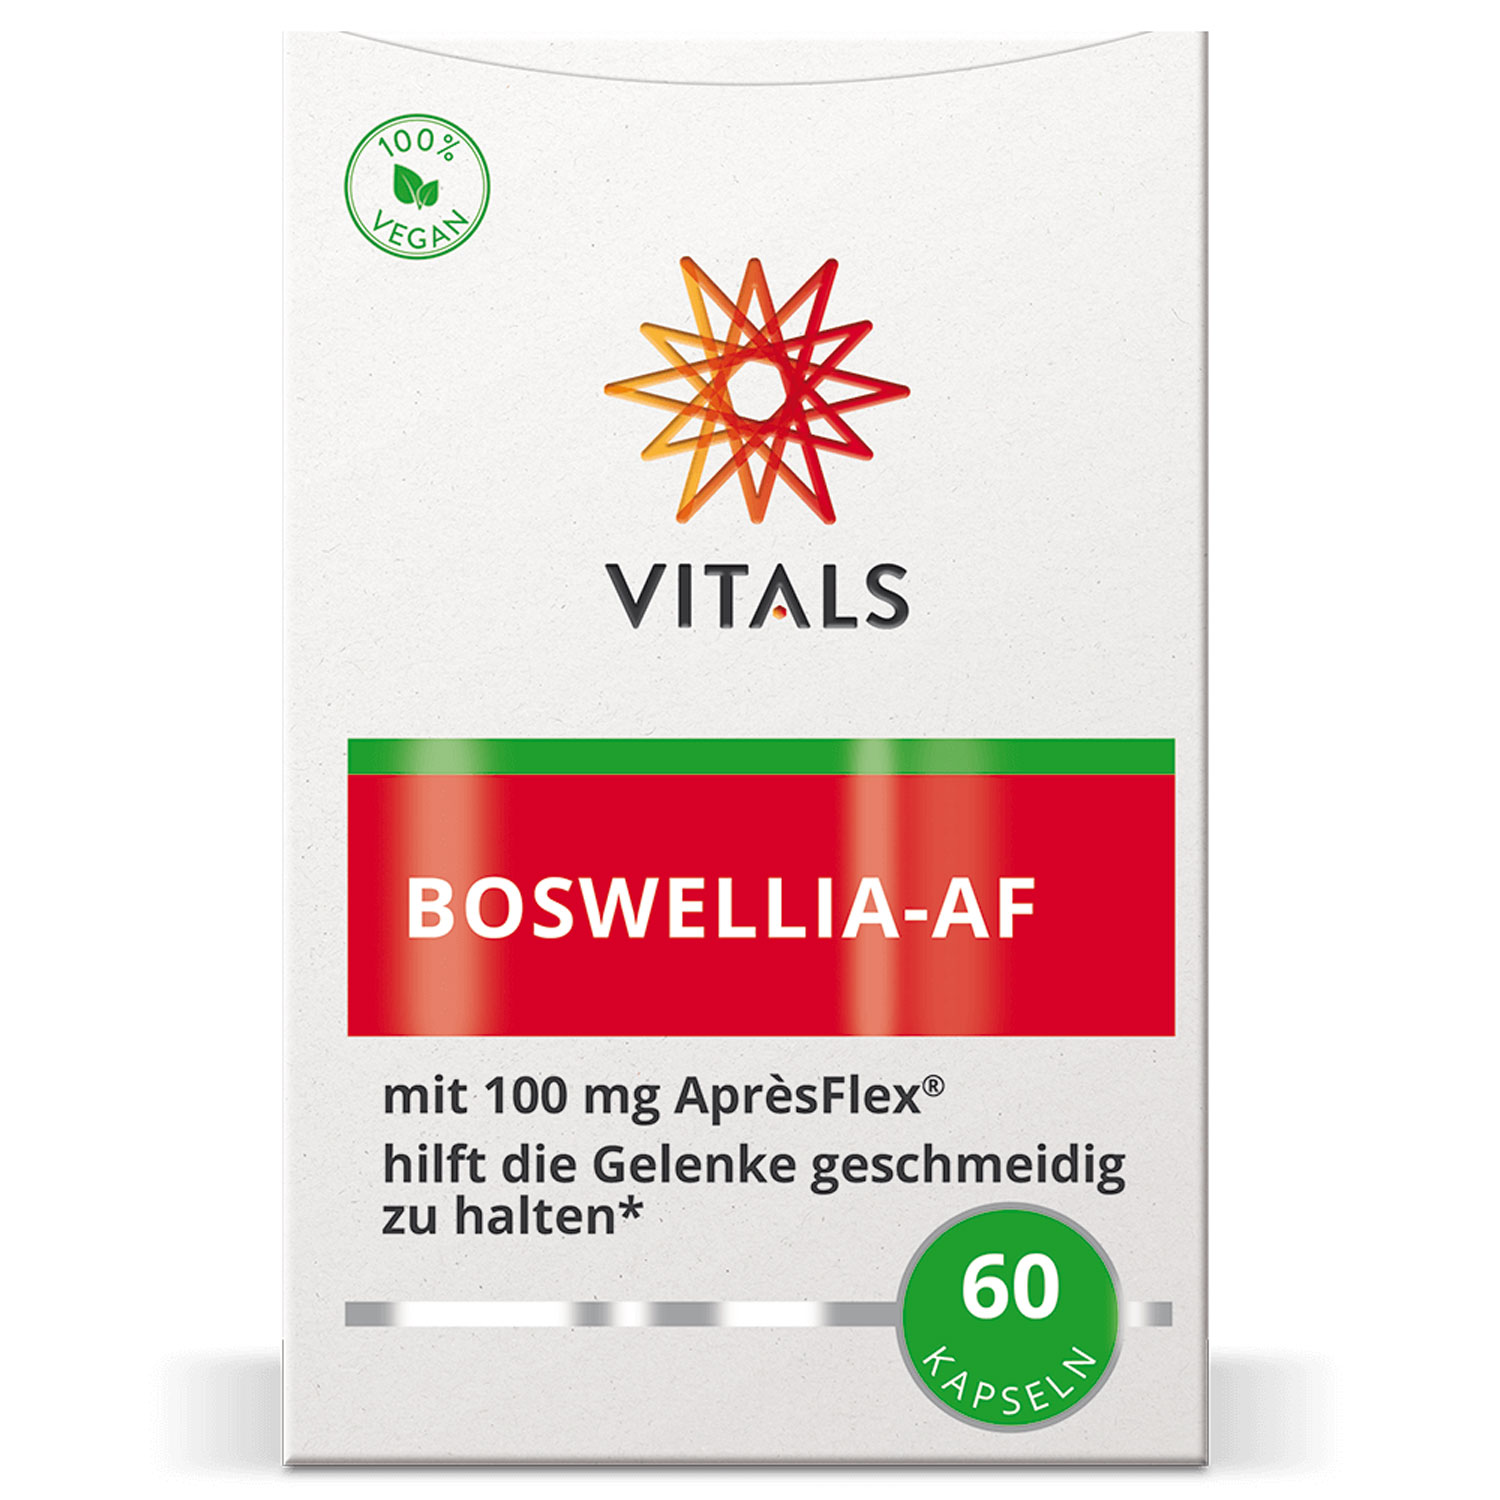 Boswellia-AF von Vitals - Verpackung